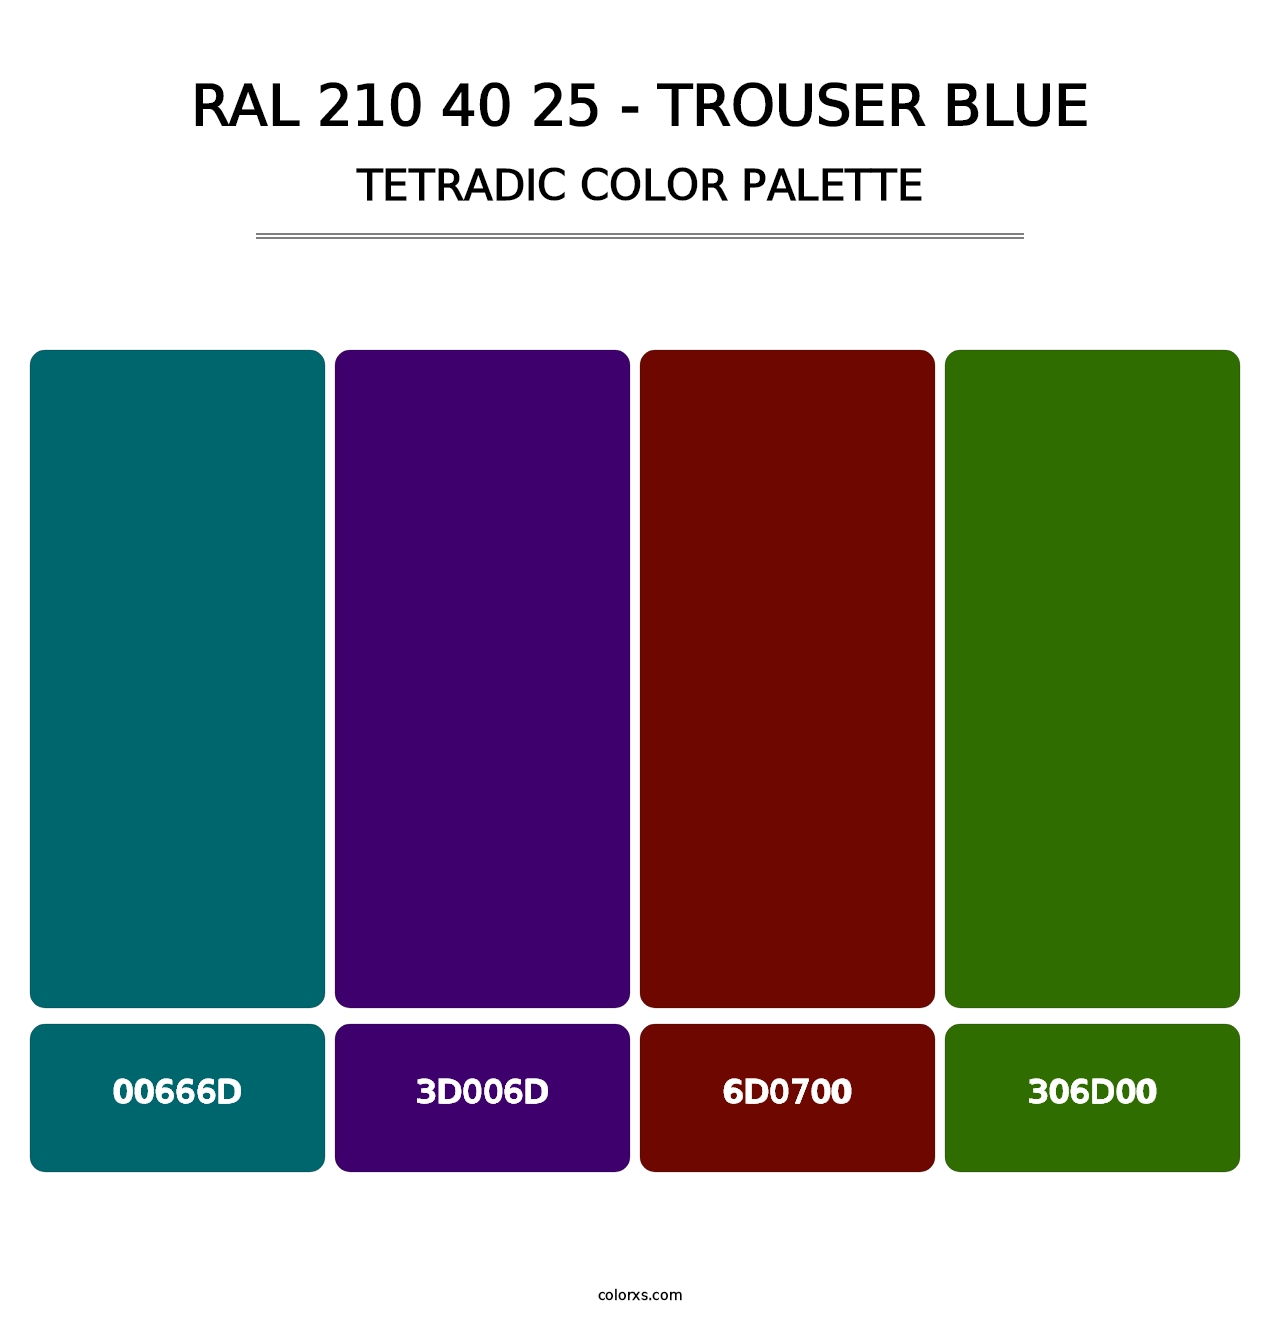 RAL 210 40 25 - Trouser Blue - Tetradic Color Palette